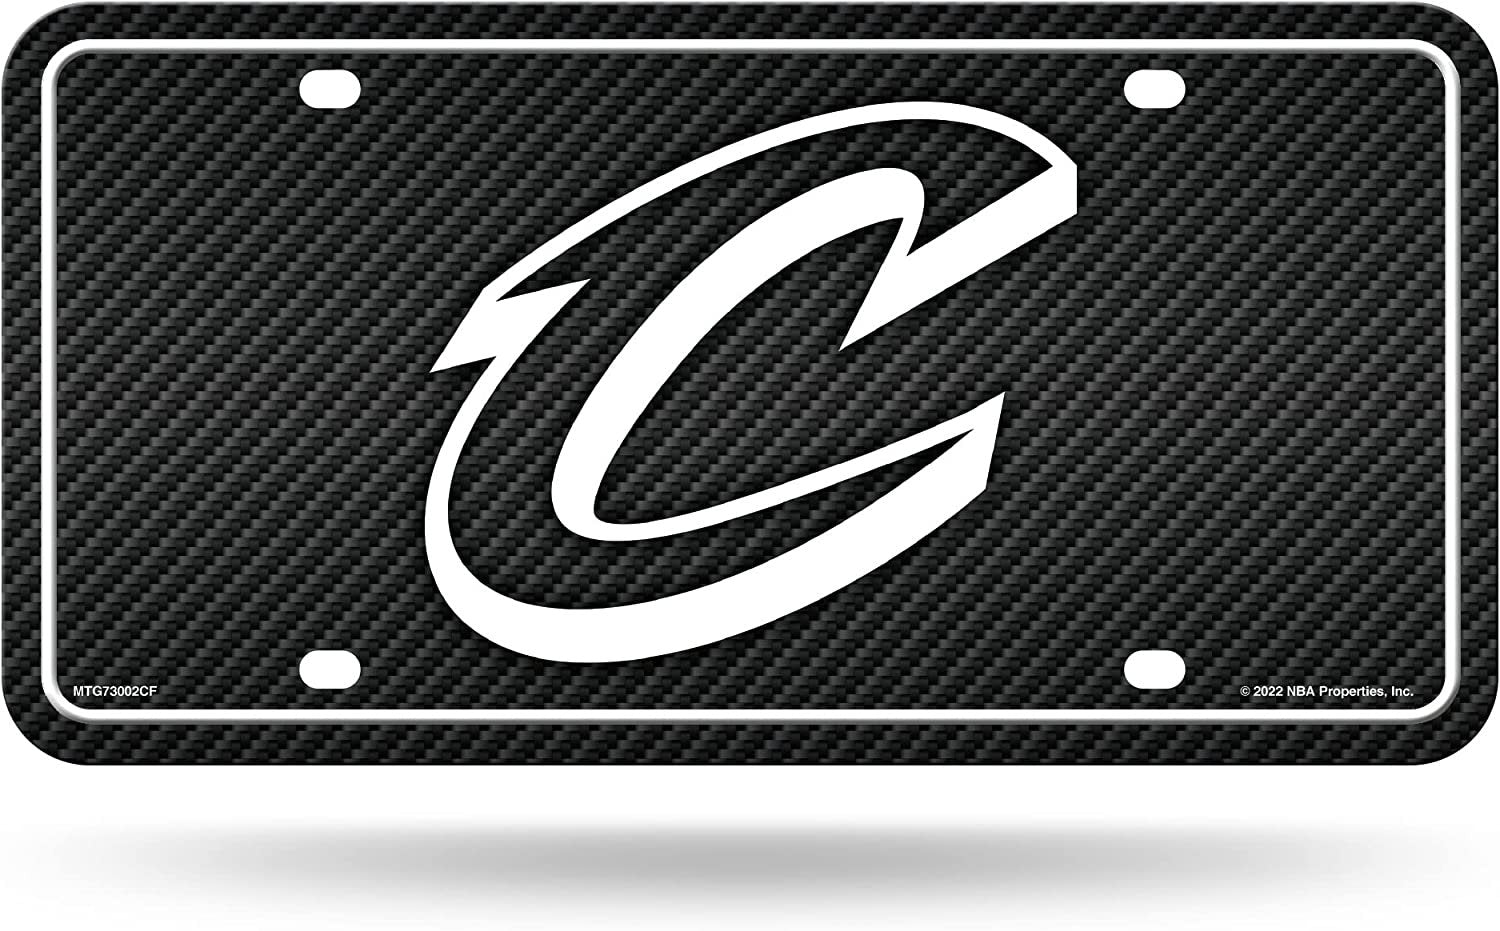 Cleveland Cavaliers Metal Tag License Plate Aluminum Novelty Carbon Fiber Design 12x6 Inch